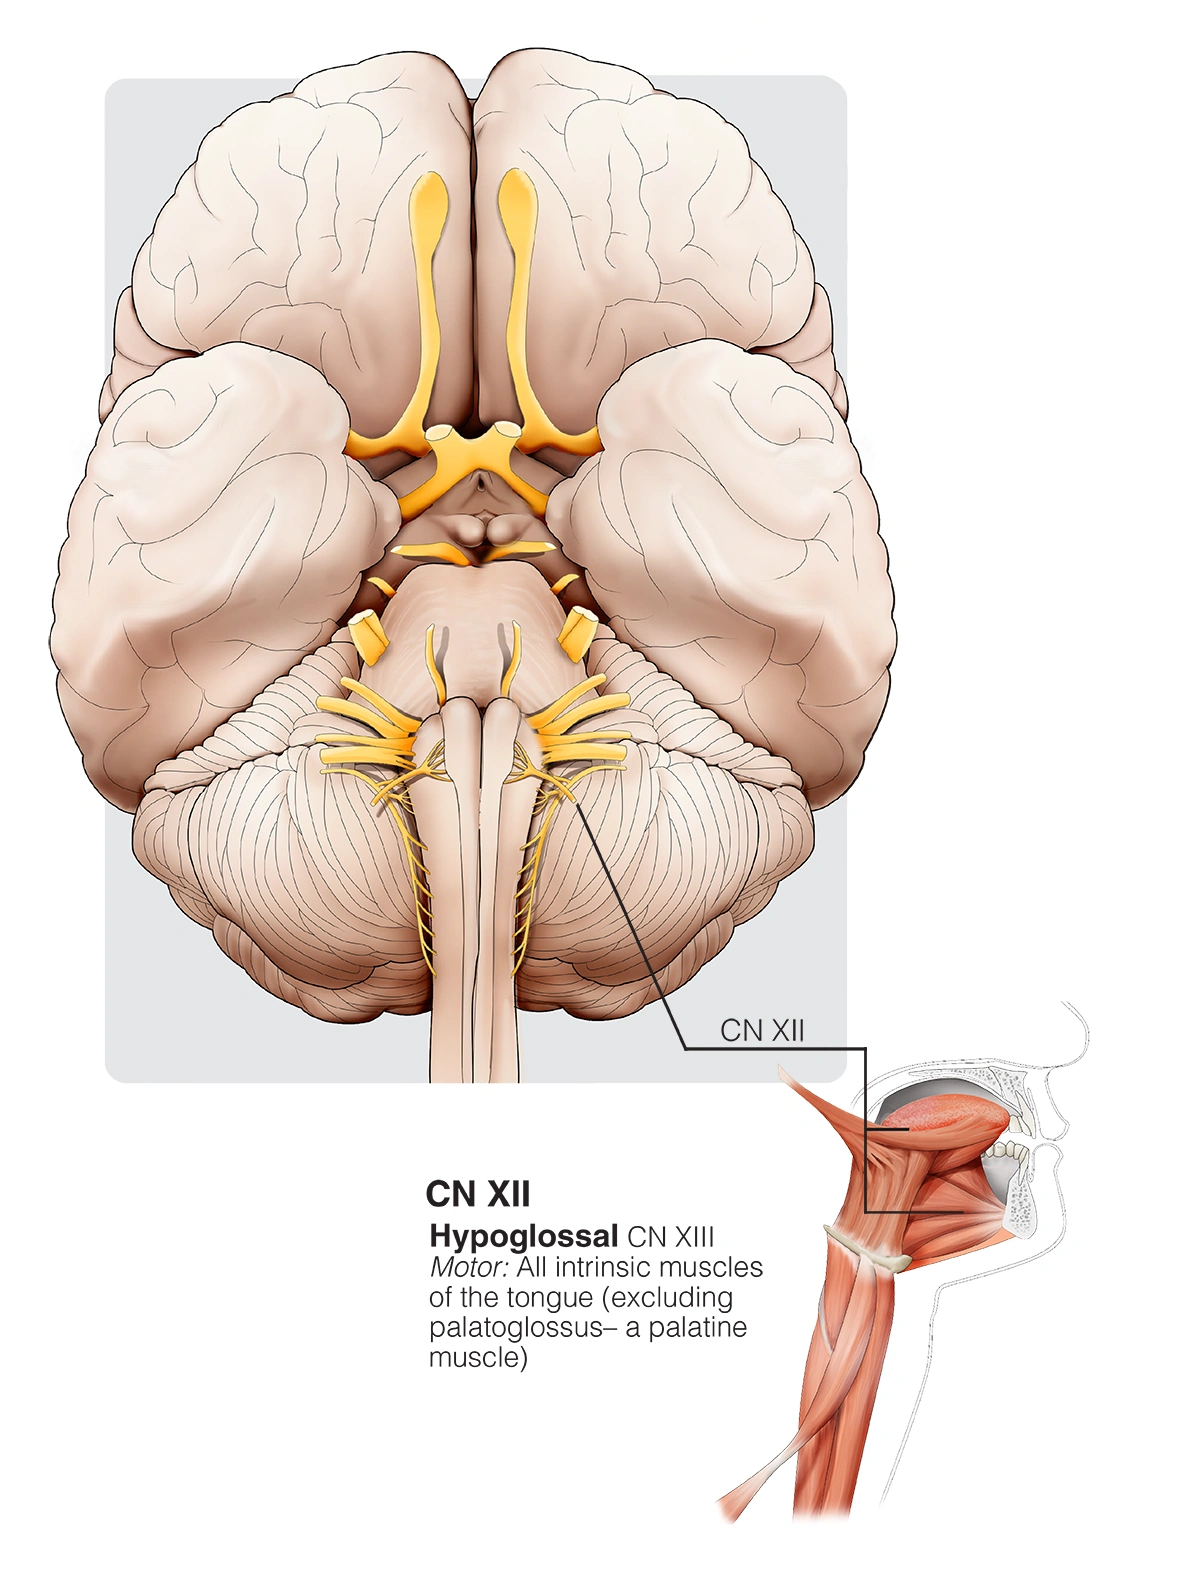 Figure 30. Cranial Nerve XII - Hypoglossal